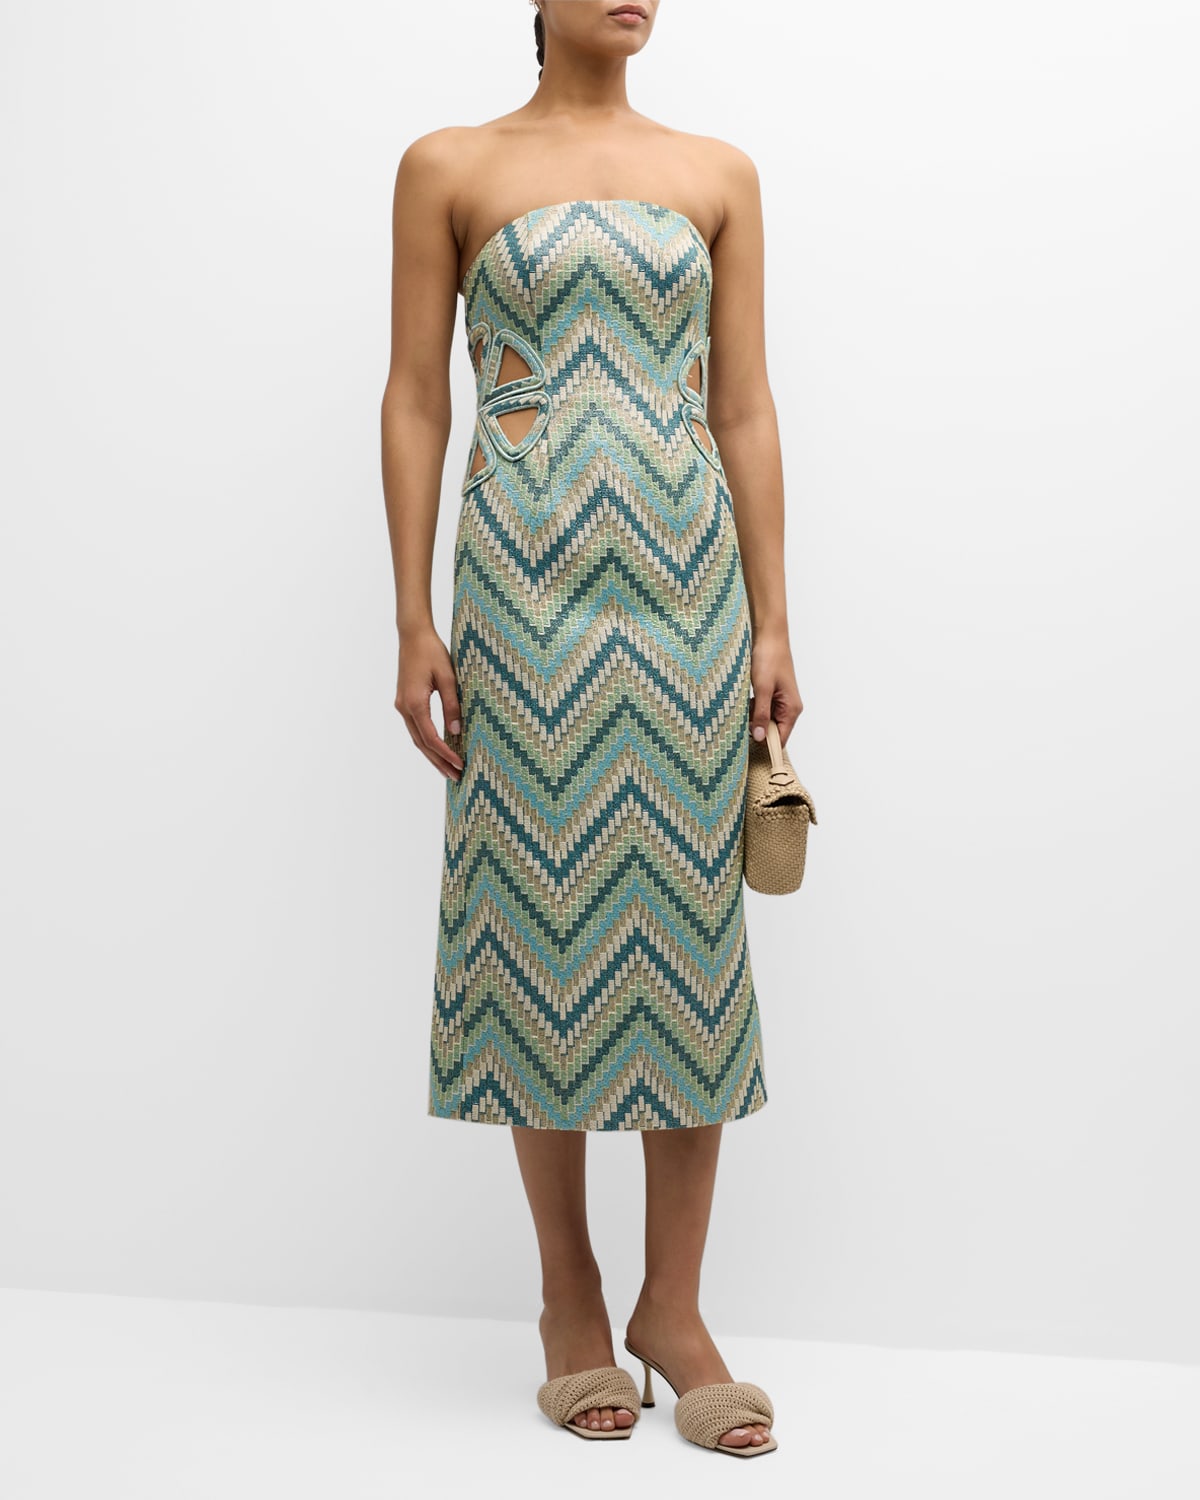 Clare Chevron Jacquard Cutout Strapless Dress